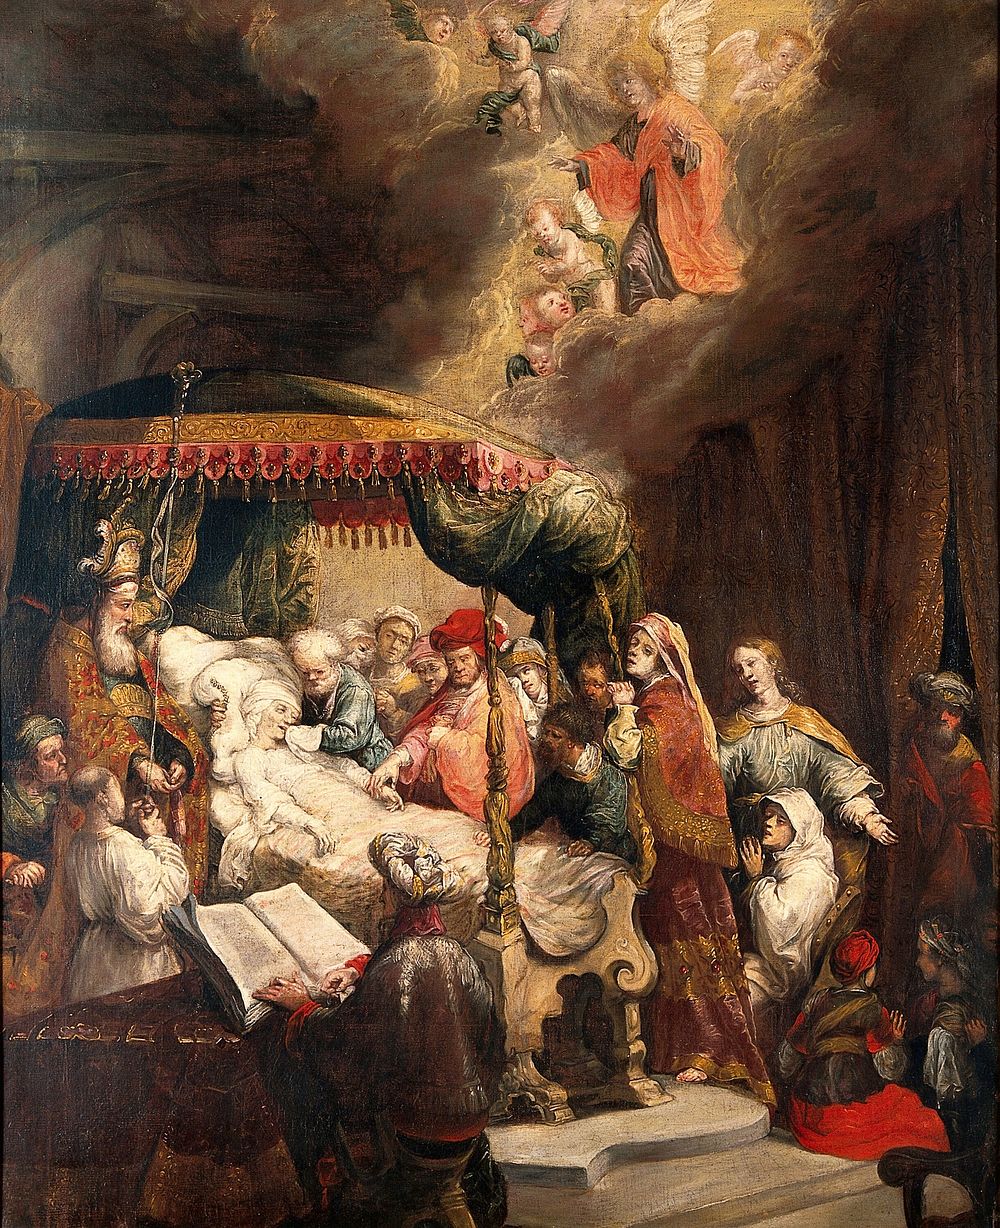 The dormition of the Virgin. Oil painting after Rembrandt van Rijn.